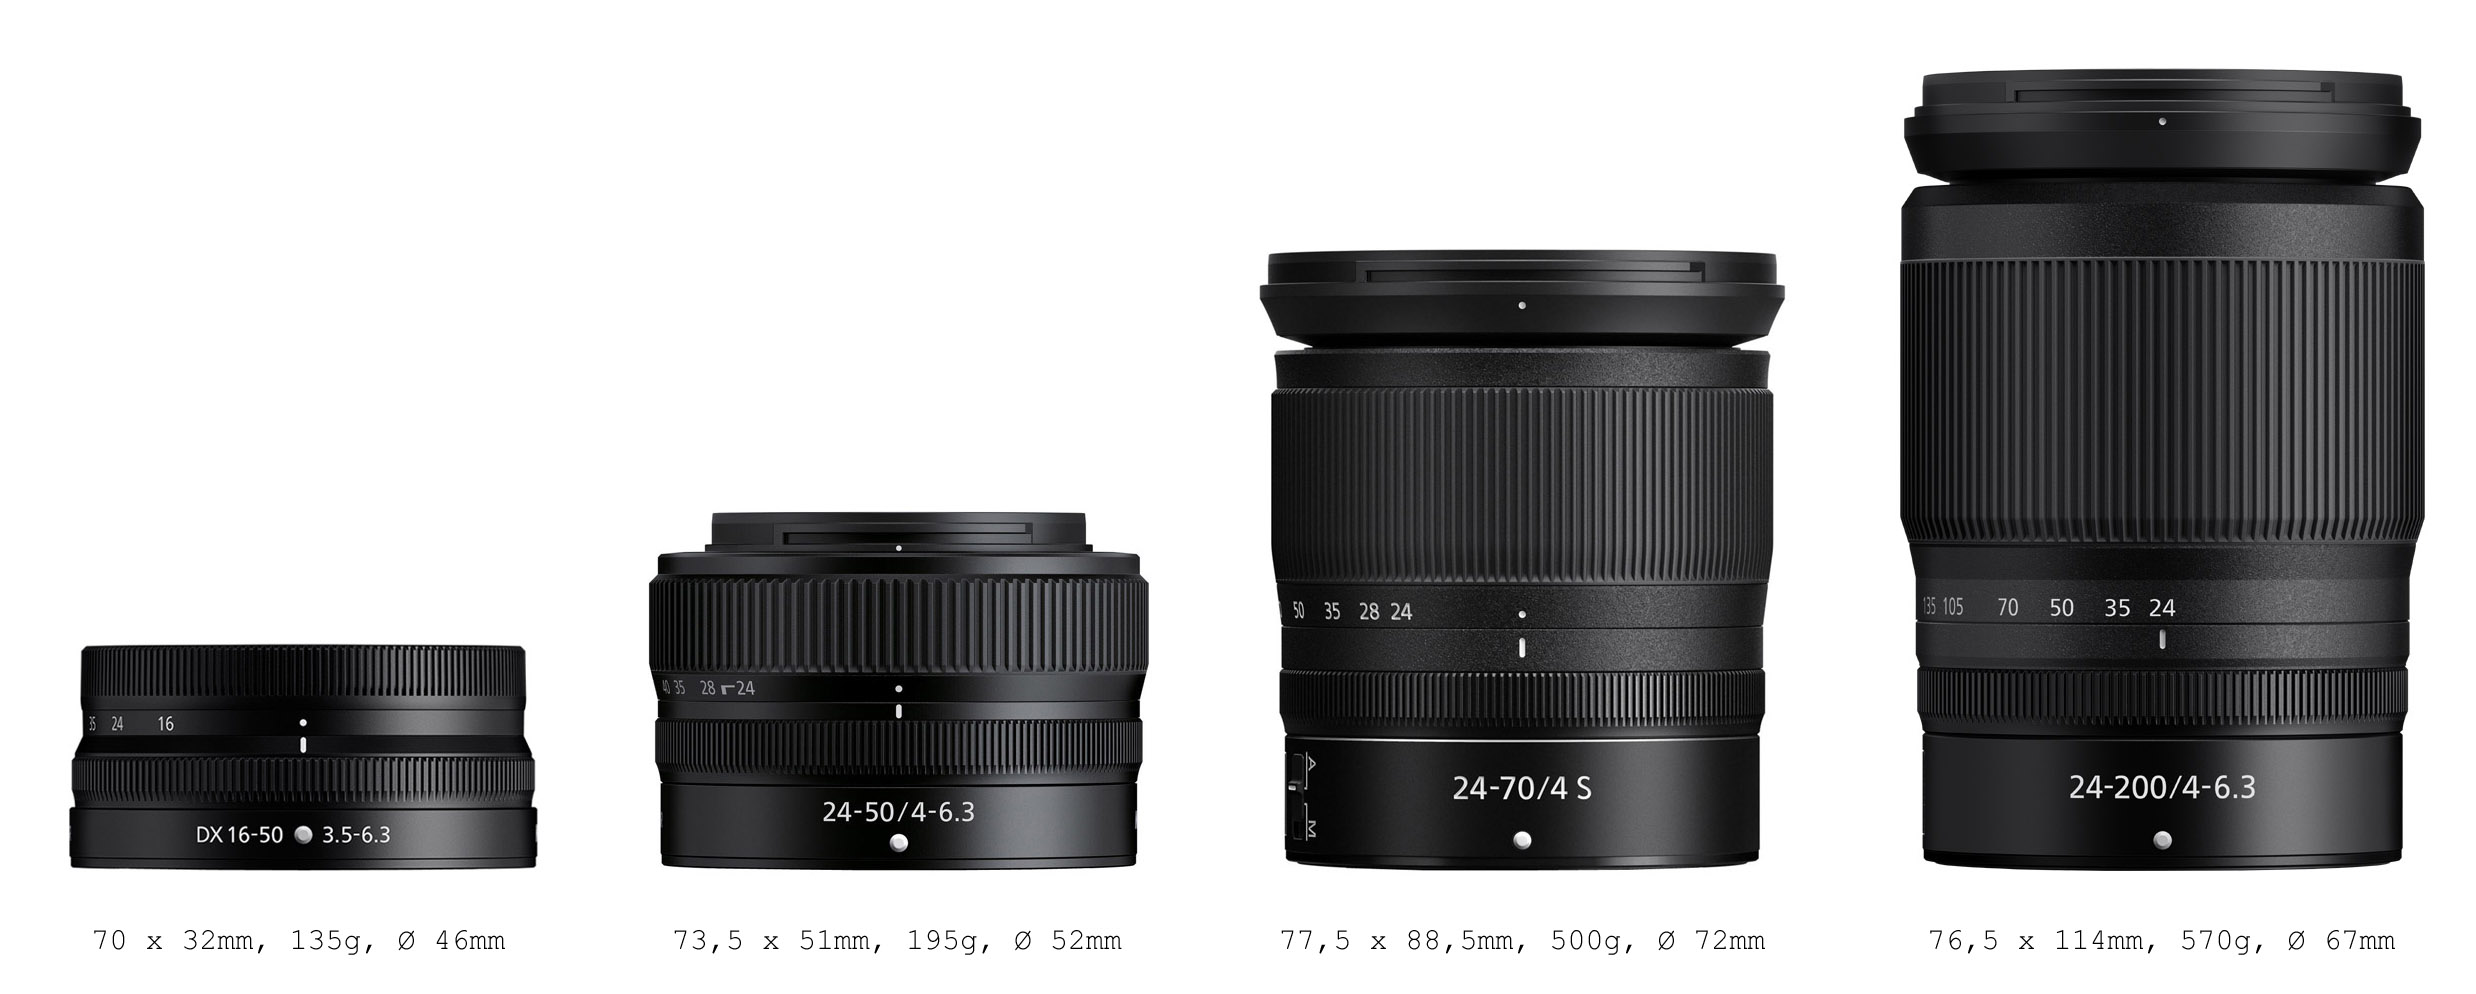 Nikkor Z 24-50mm f/4-6.3 lens size comparisons - Nikon Rumors